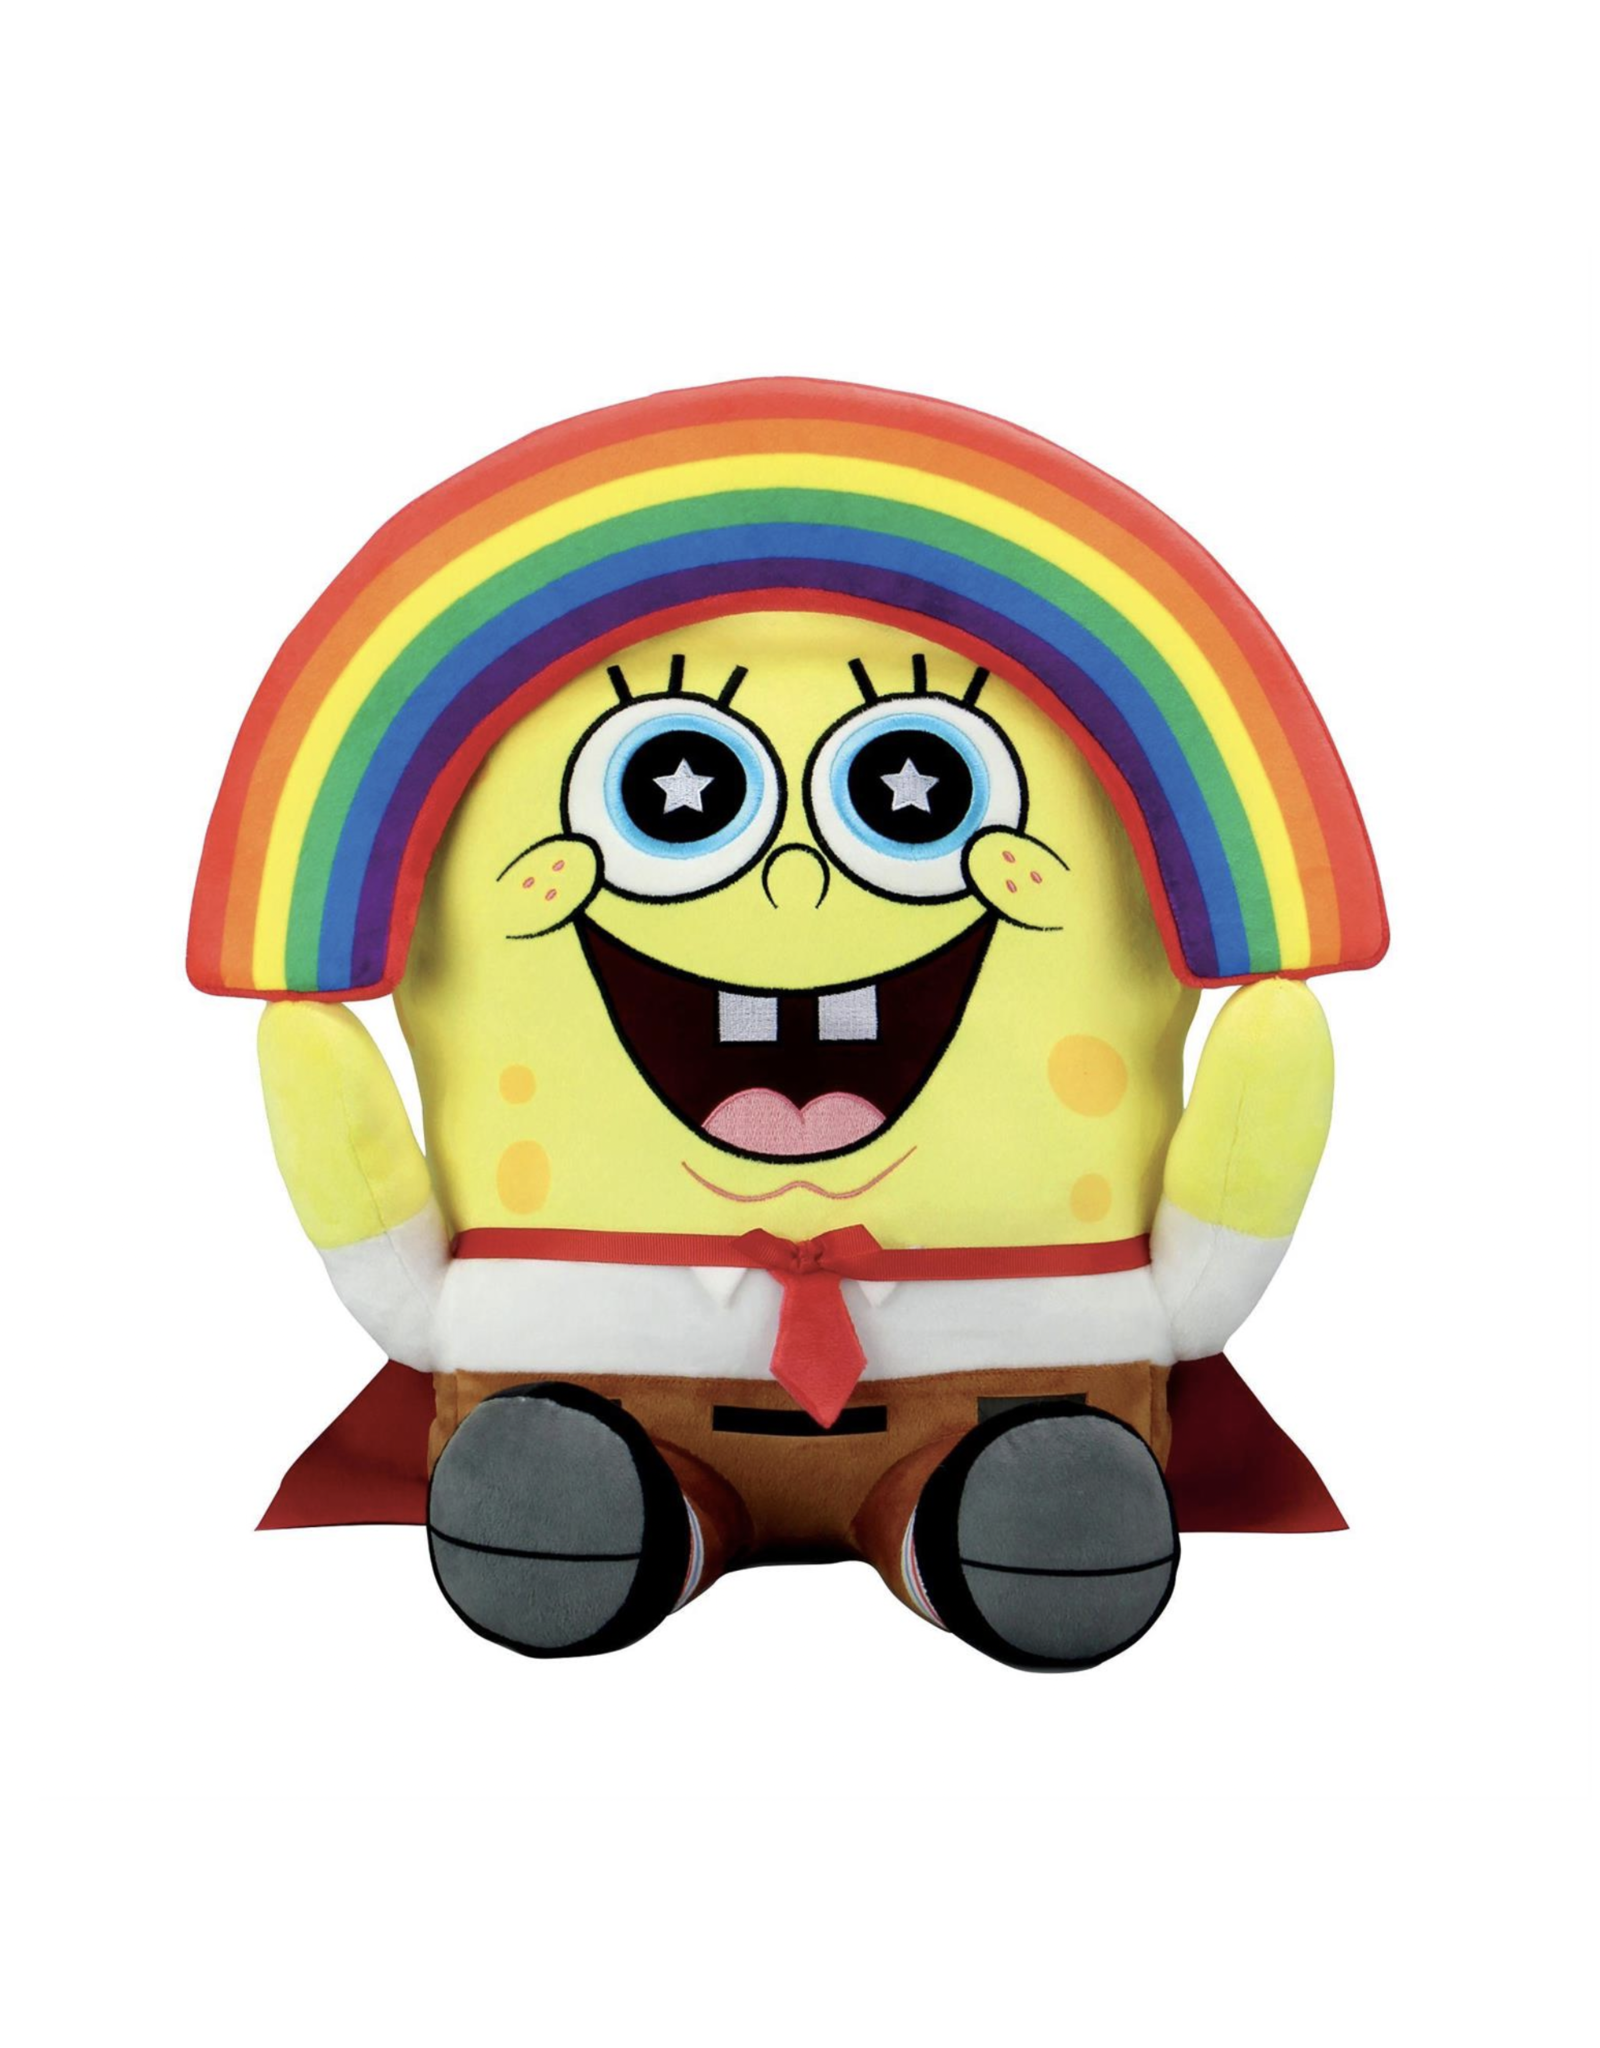 SpongeBob SquarePants Rainbow Hug Me Shake Action Plush